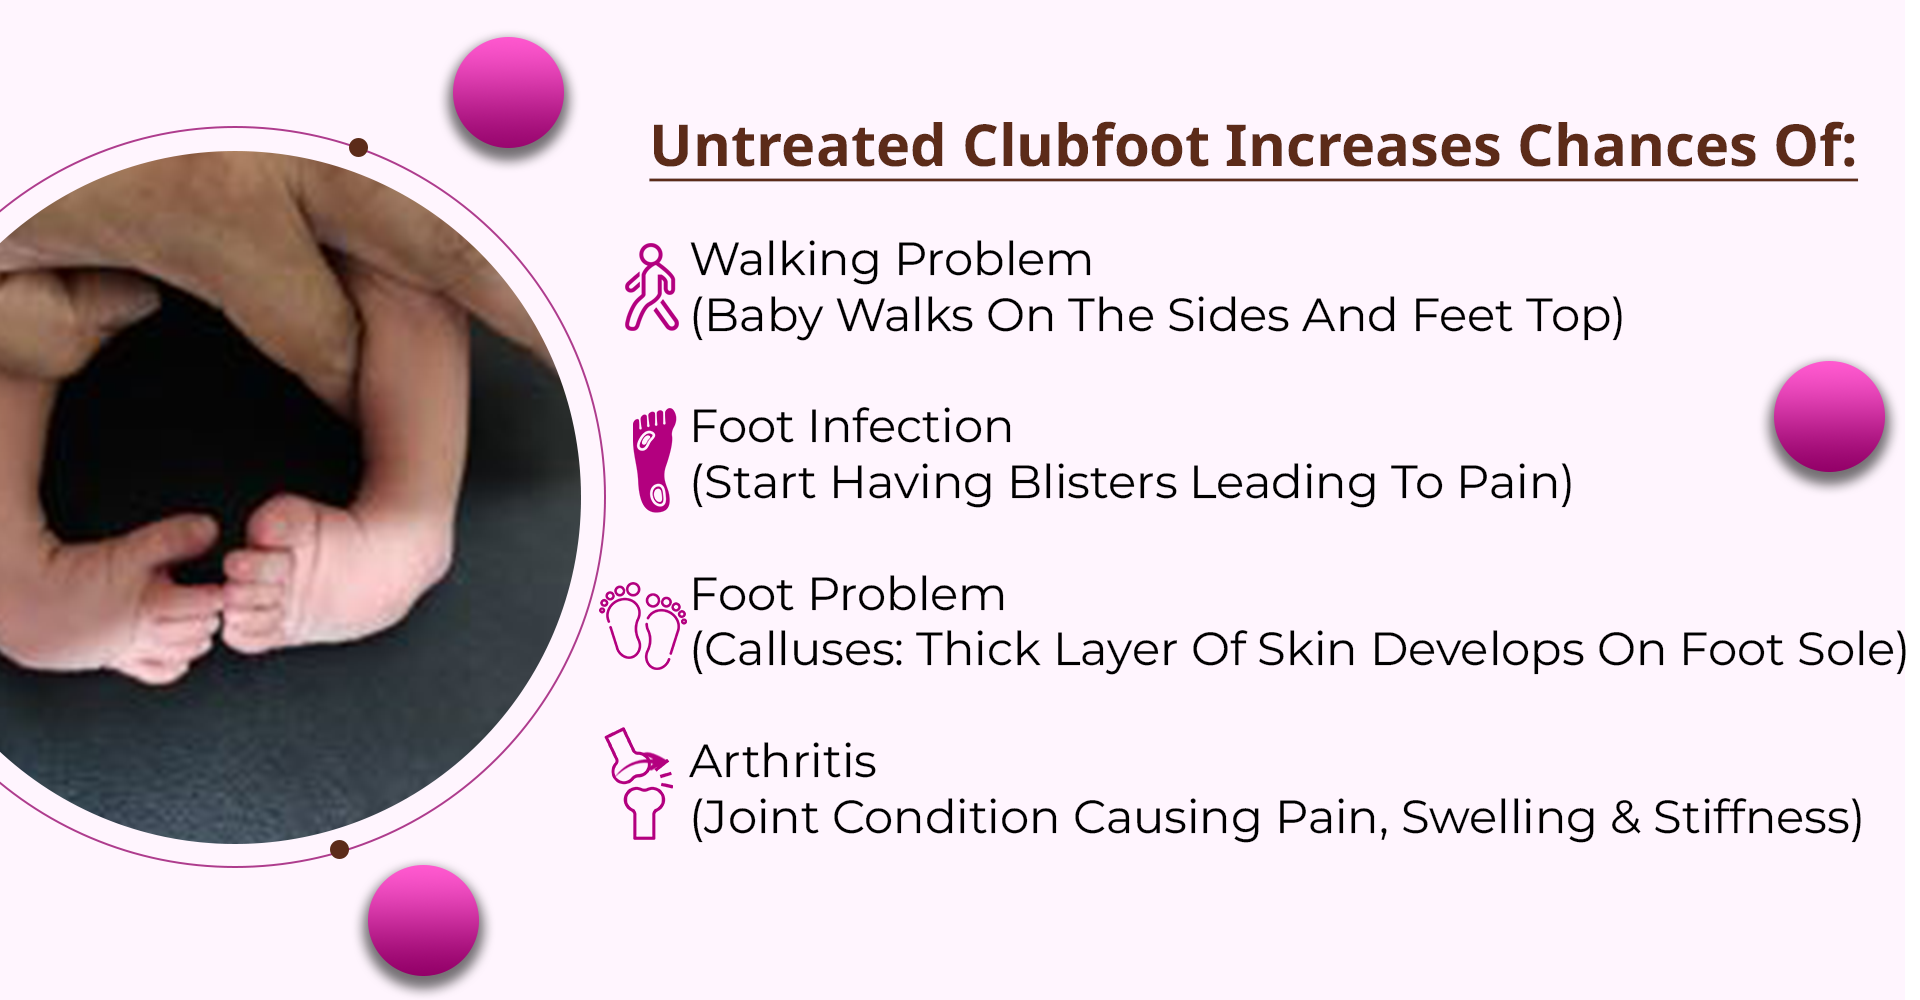 Clubfoot Deformity: Common Birth Defect